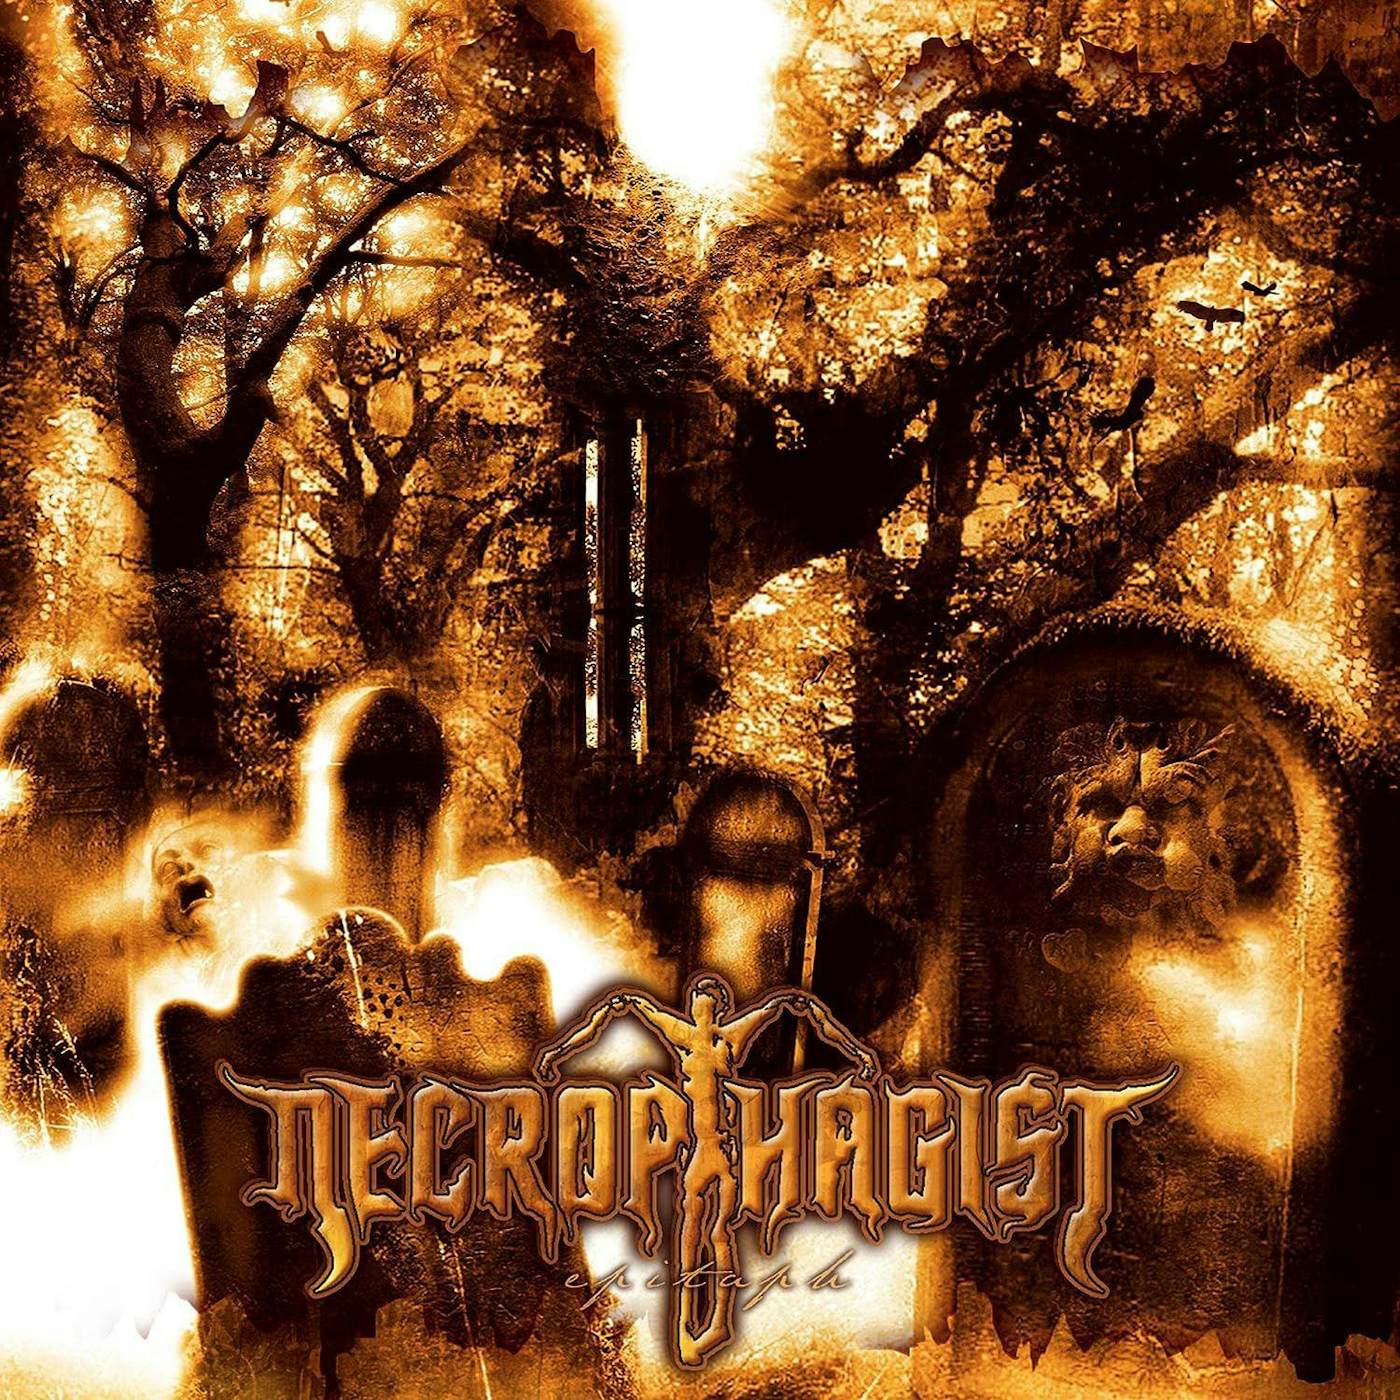 Necrophagist Epitaph (Translucent Gold & Black Galaxy Merge) Vinyl Record